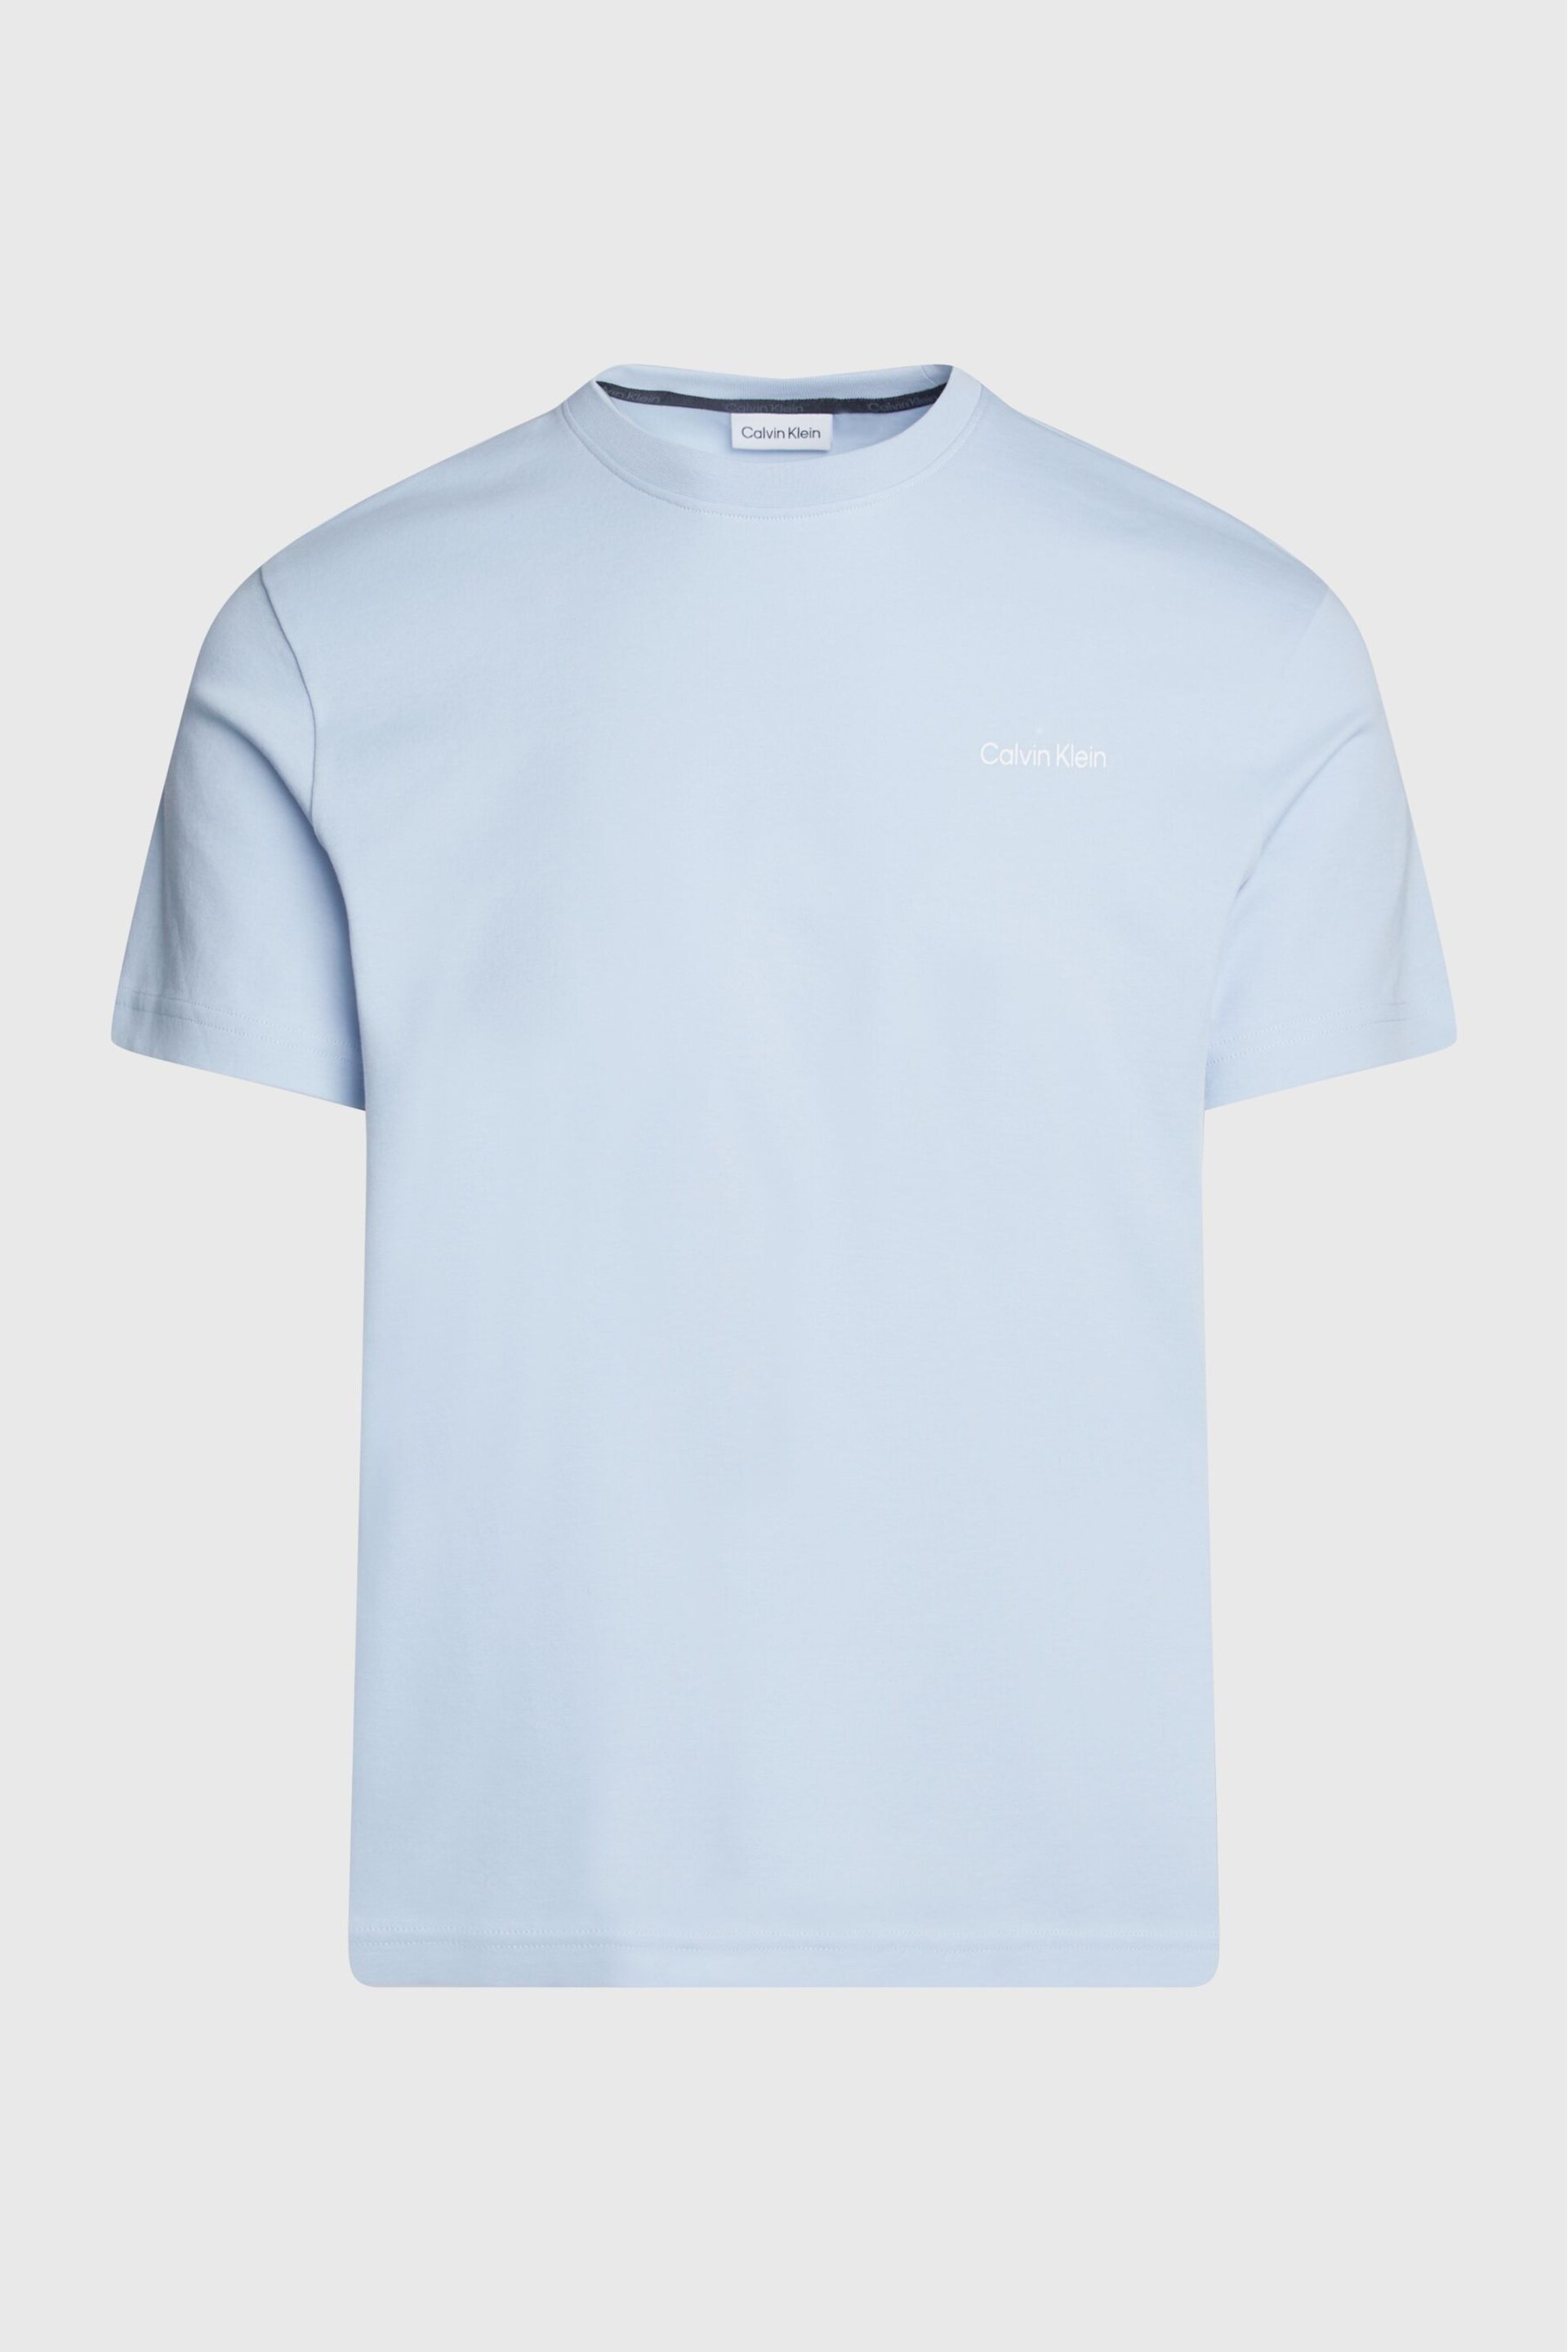 Calvin Klein Blue Slogan T-Shirt And Shorts Set - Image 4 of 4